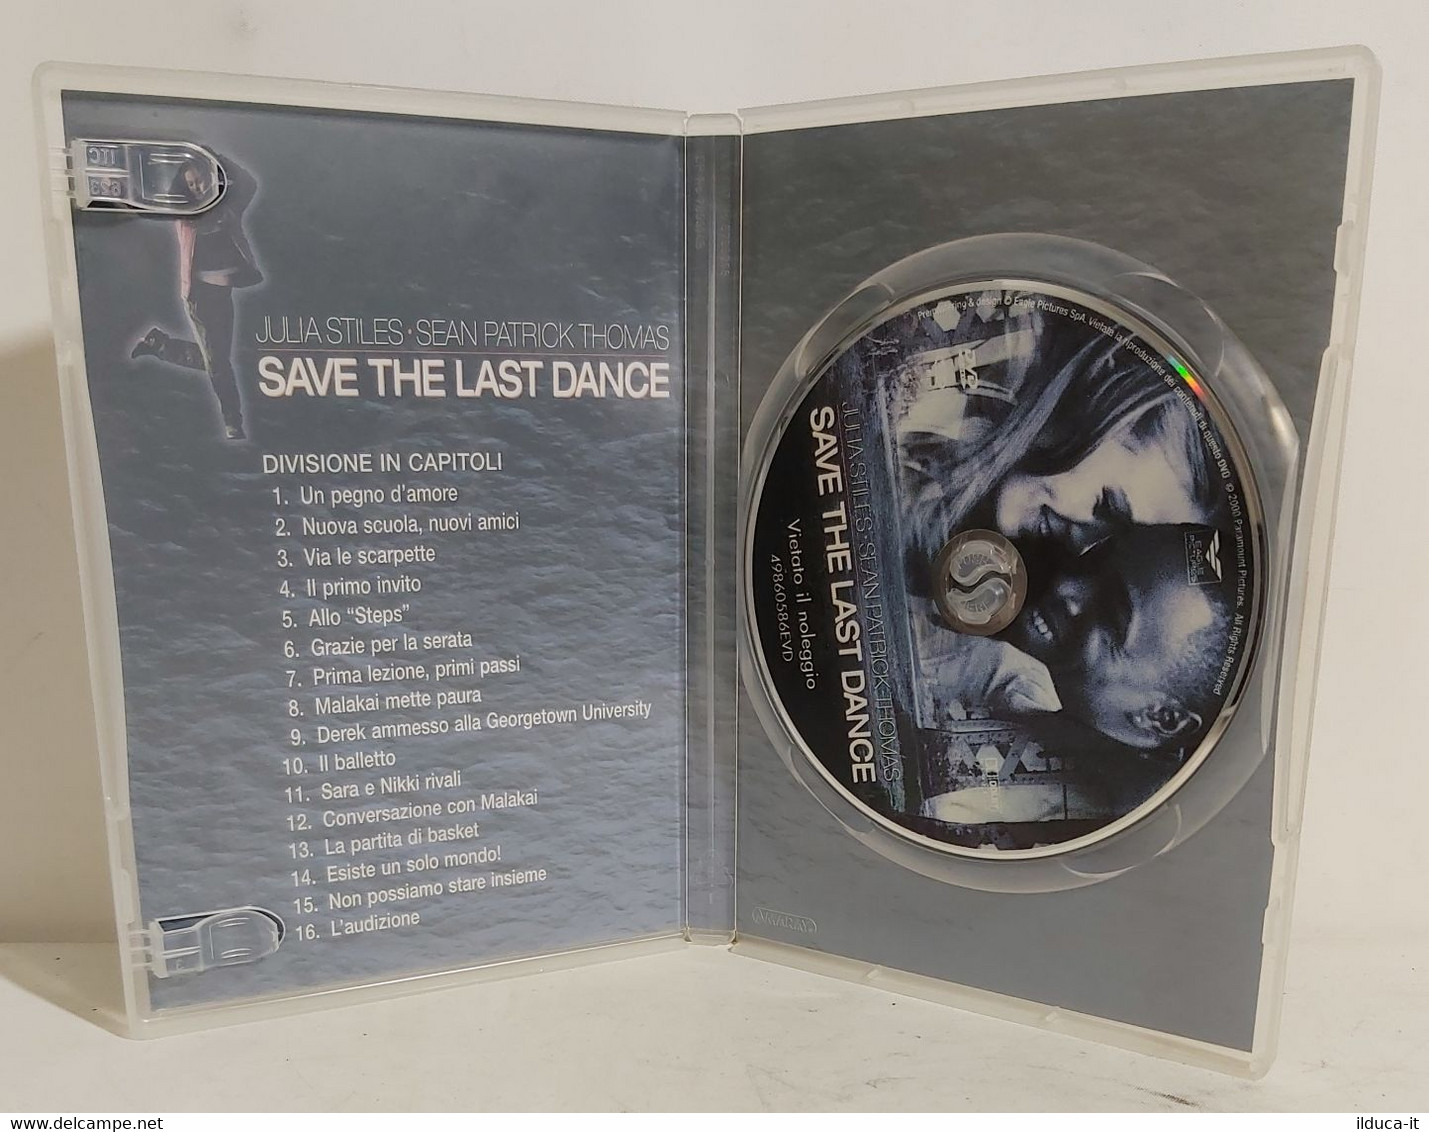 I101492 DVD - Save The Last Dance - Julia Stiles Sean Patrick Thomas - Romantique